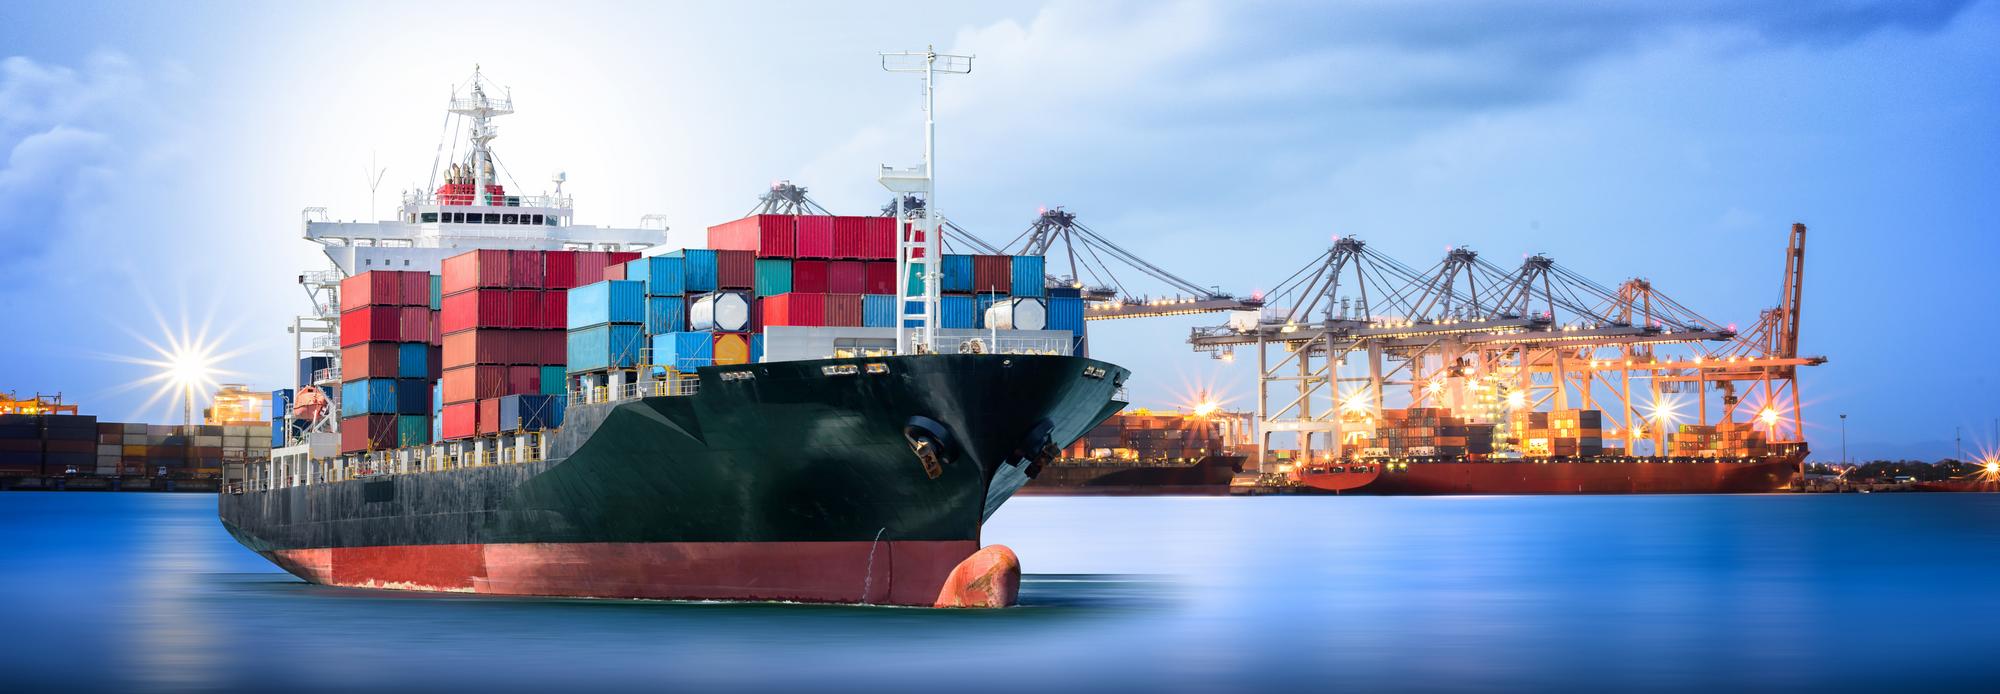 header_shipbuiliding_container_cargo_ship_ports_crane_harbor - T-DRILL